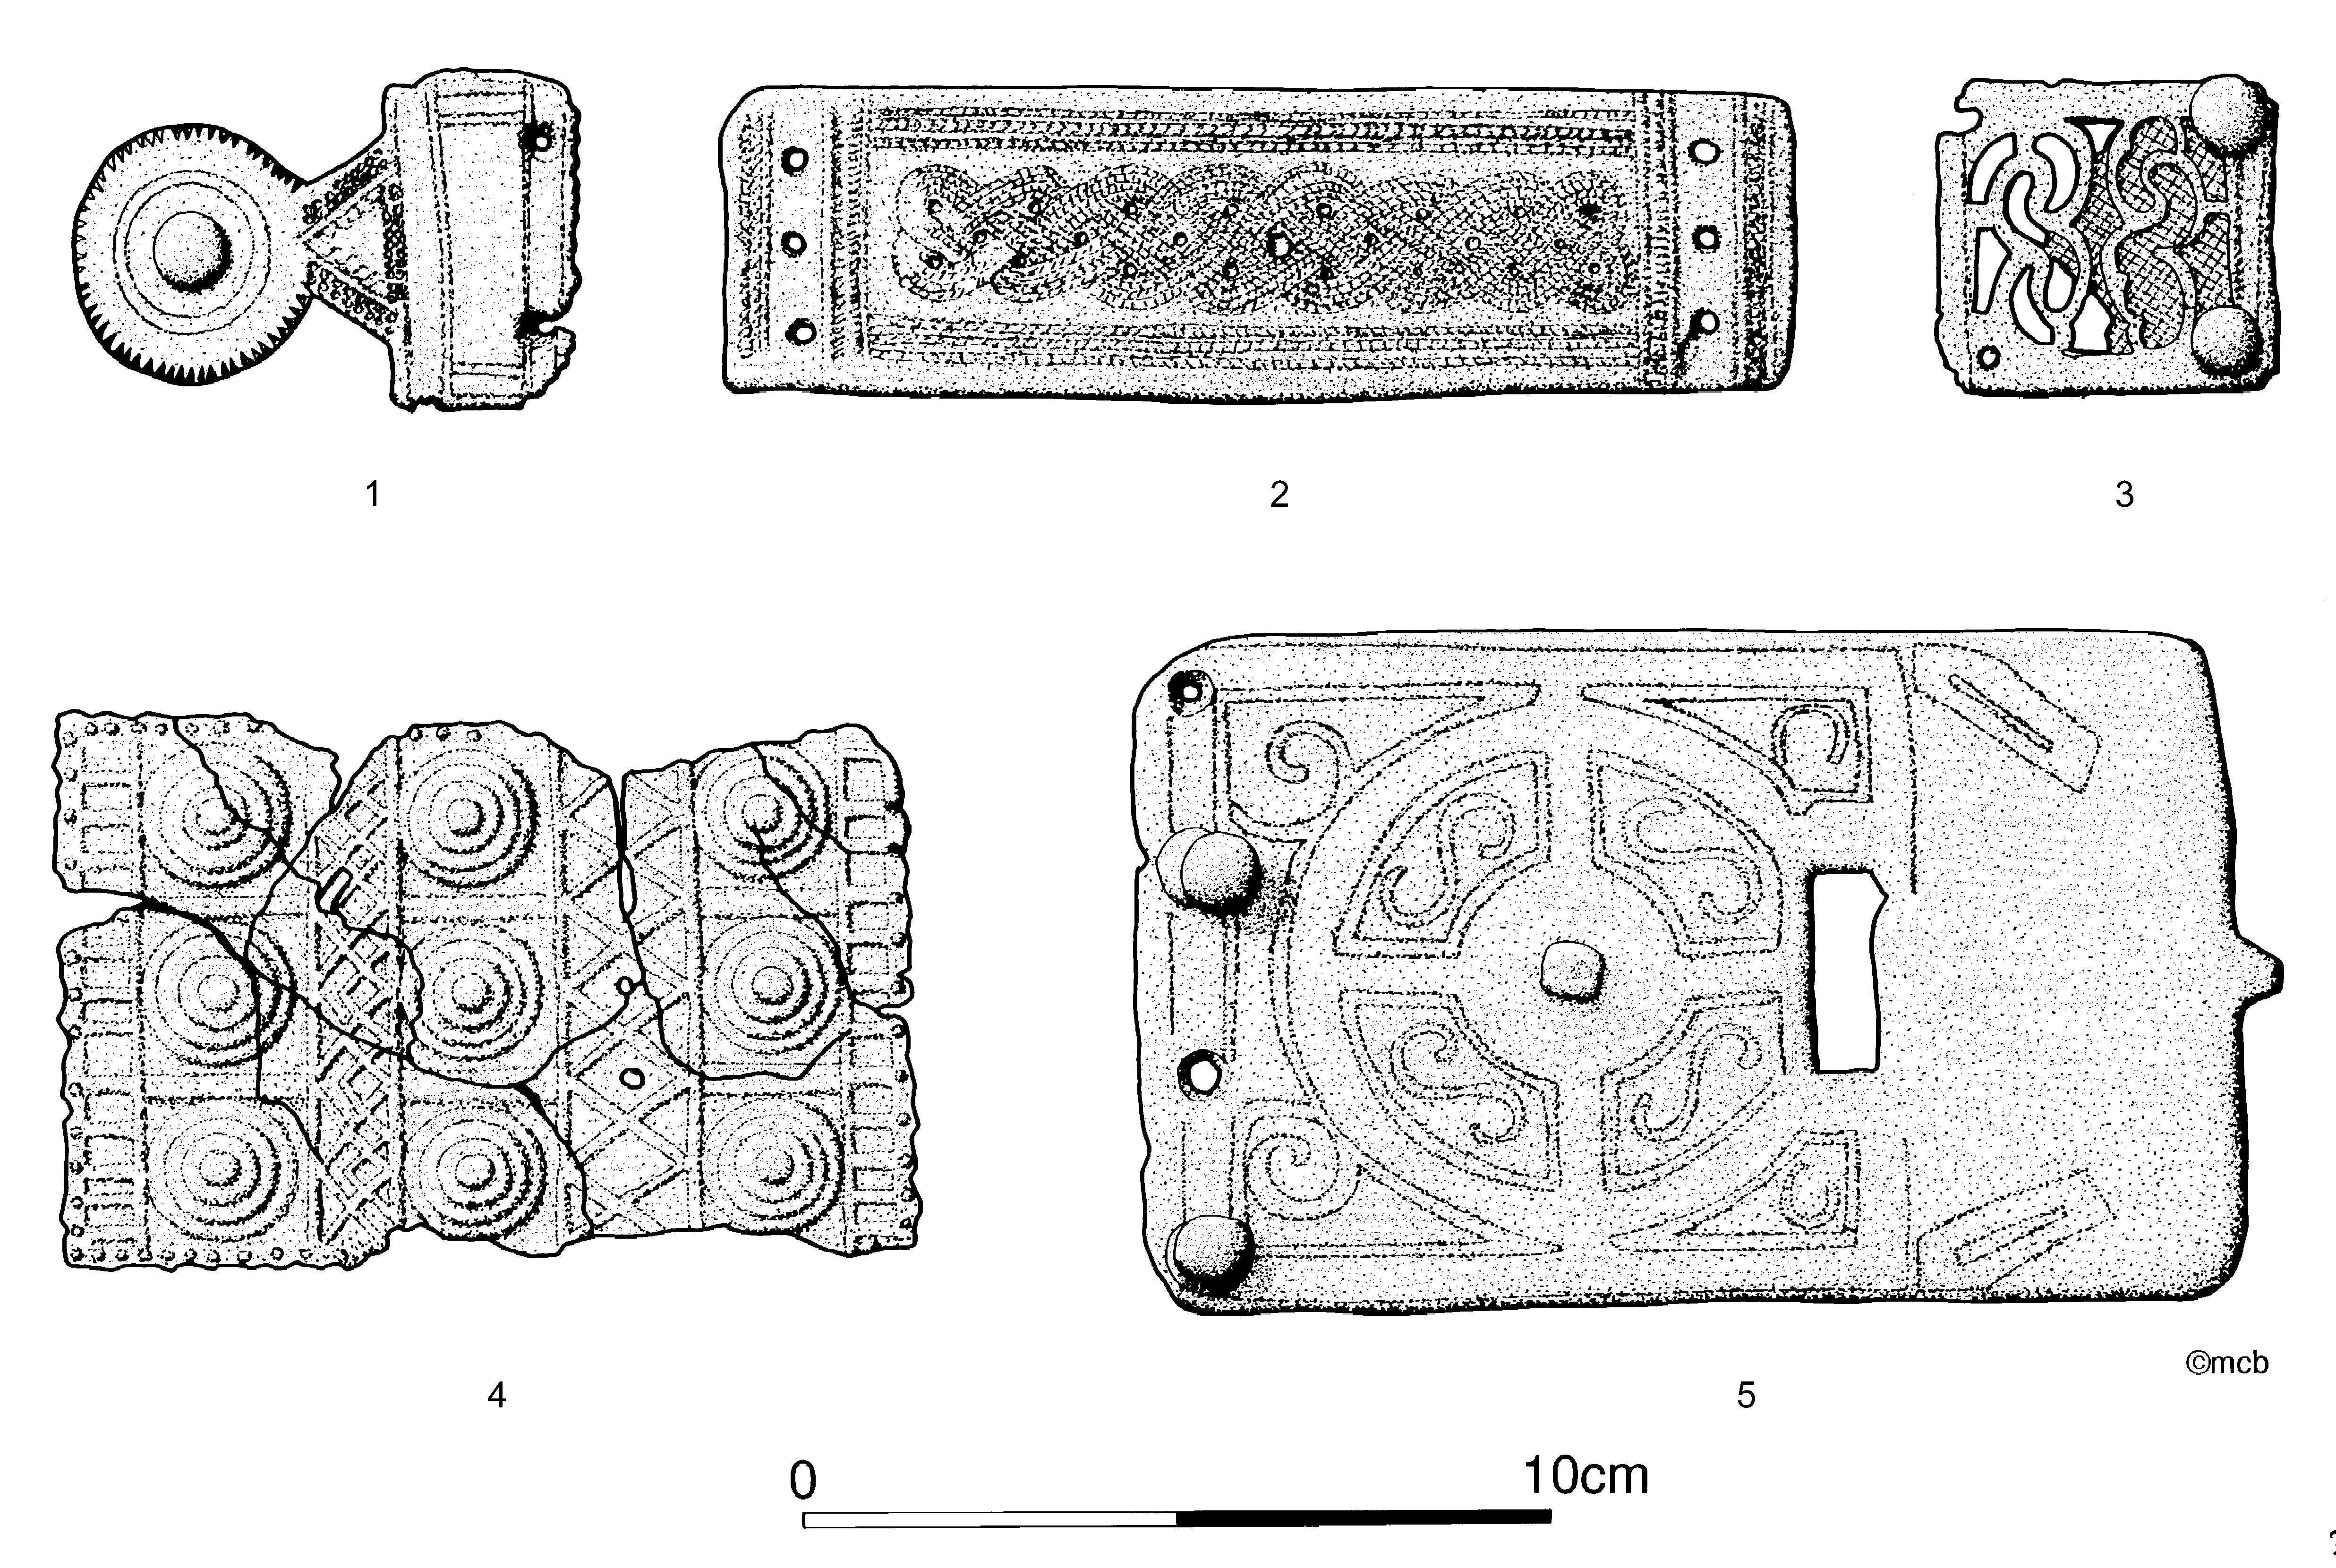 The figures - Roman Military Equipment